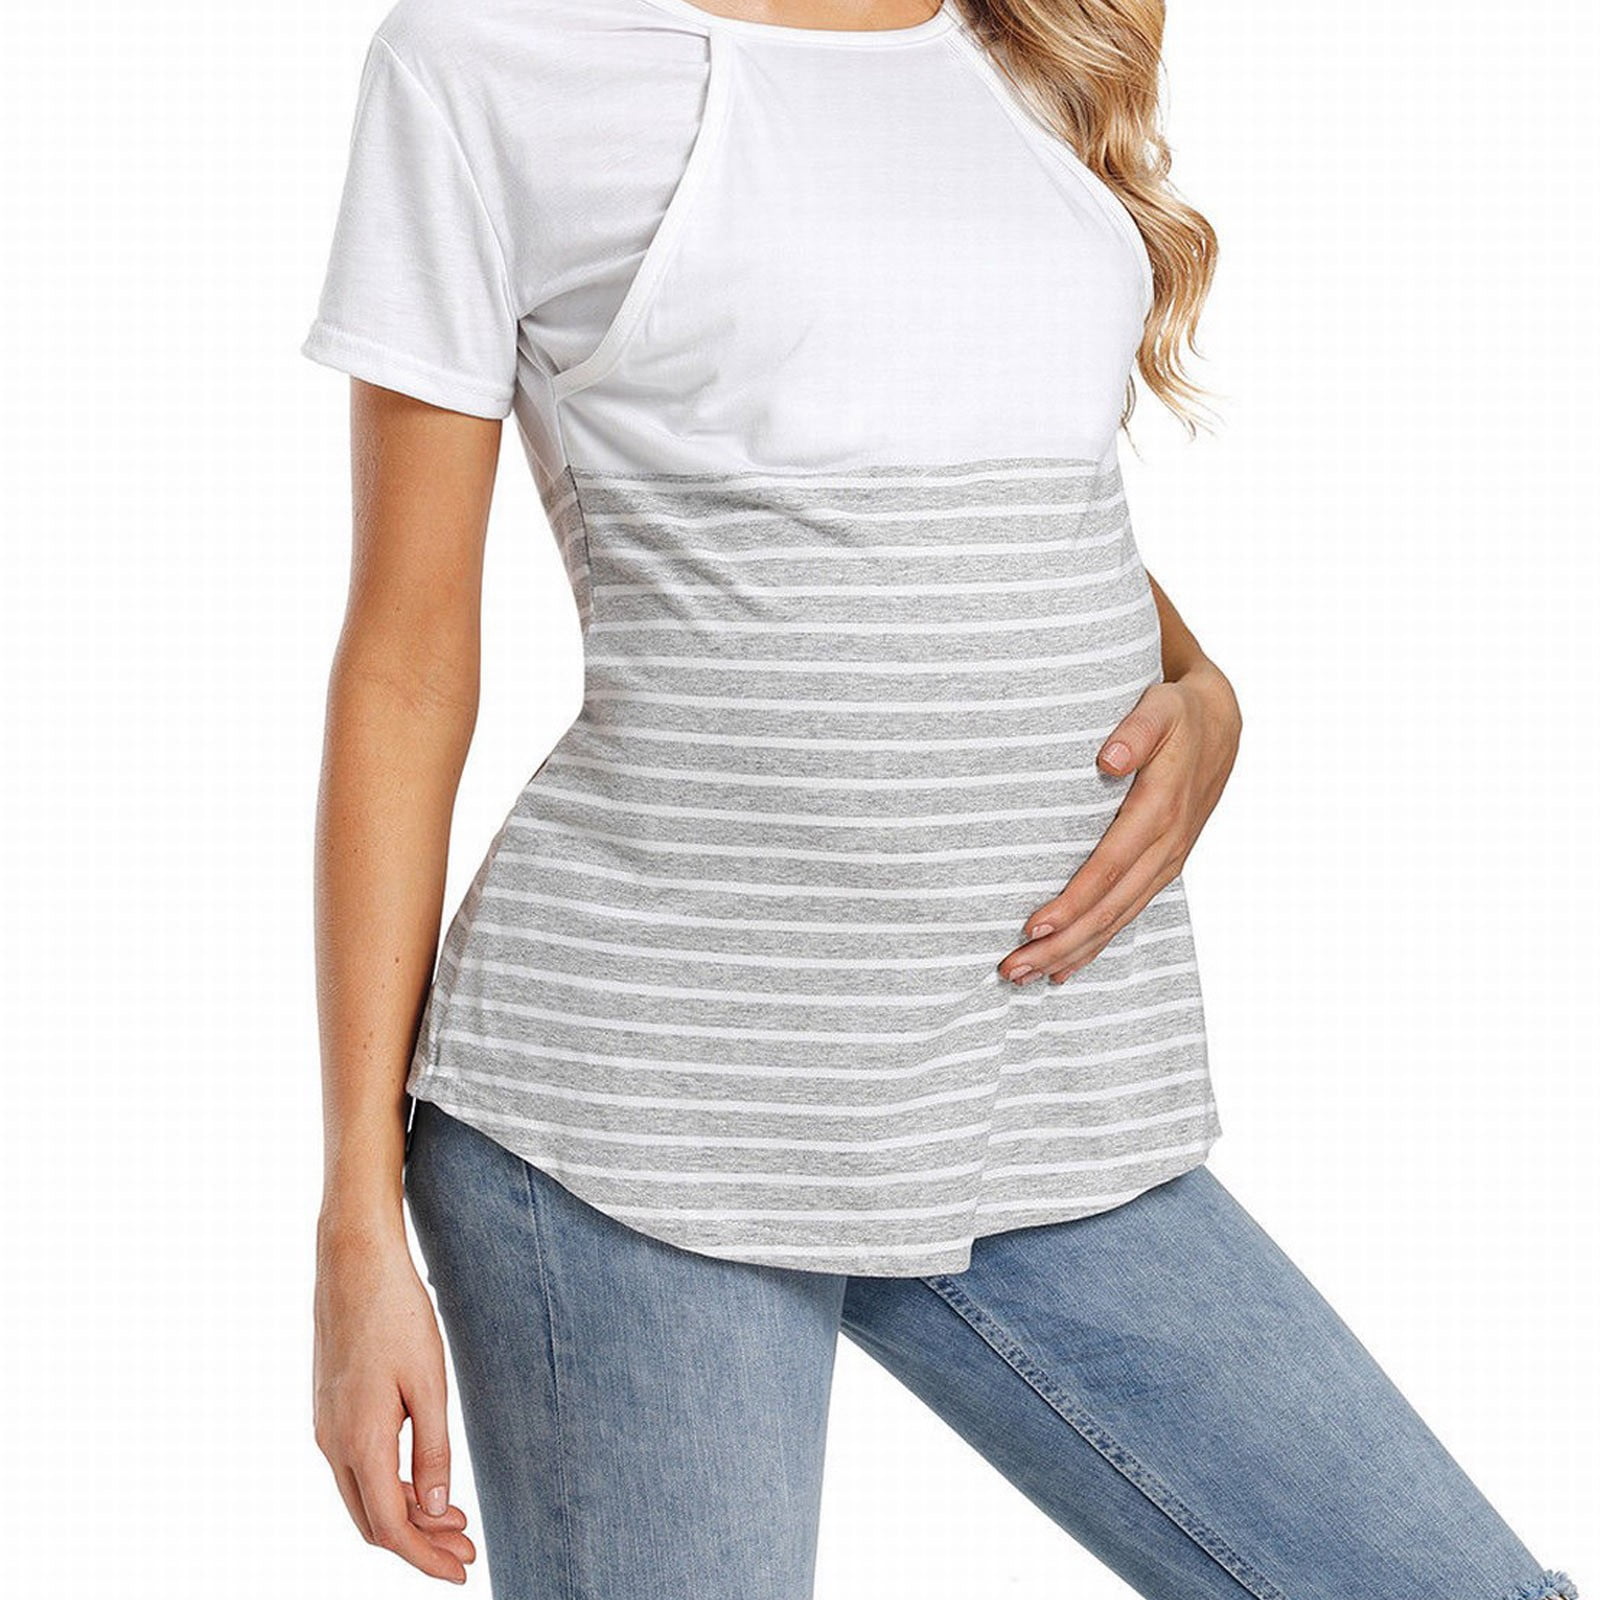 WAJCSHFS Maternity T Shirts Loose Fitting Maternity Blouse for Work  Pregnancy Top Short Sleeve Shirt (White,XL)